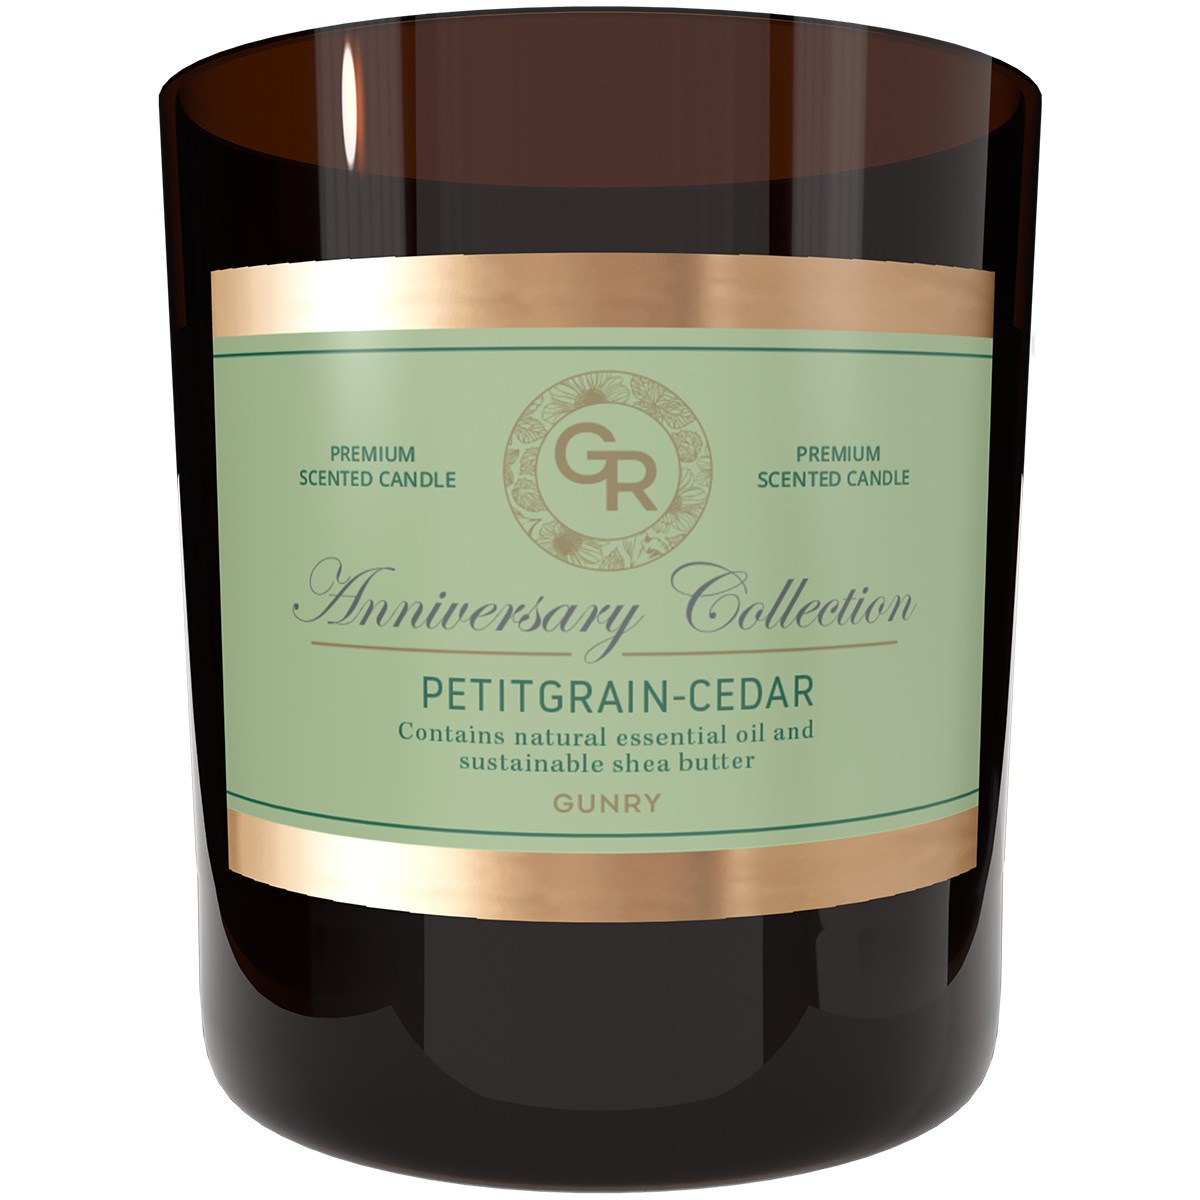 Gunry Petitgrain Cedar Anniversary Collection Scented Candle 115